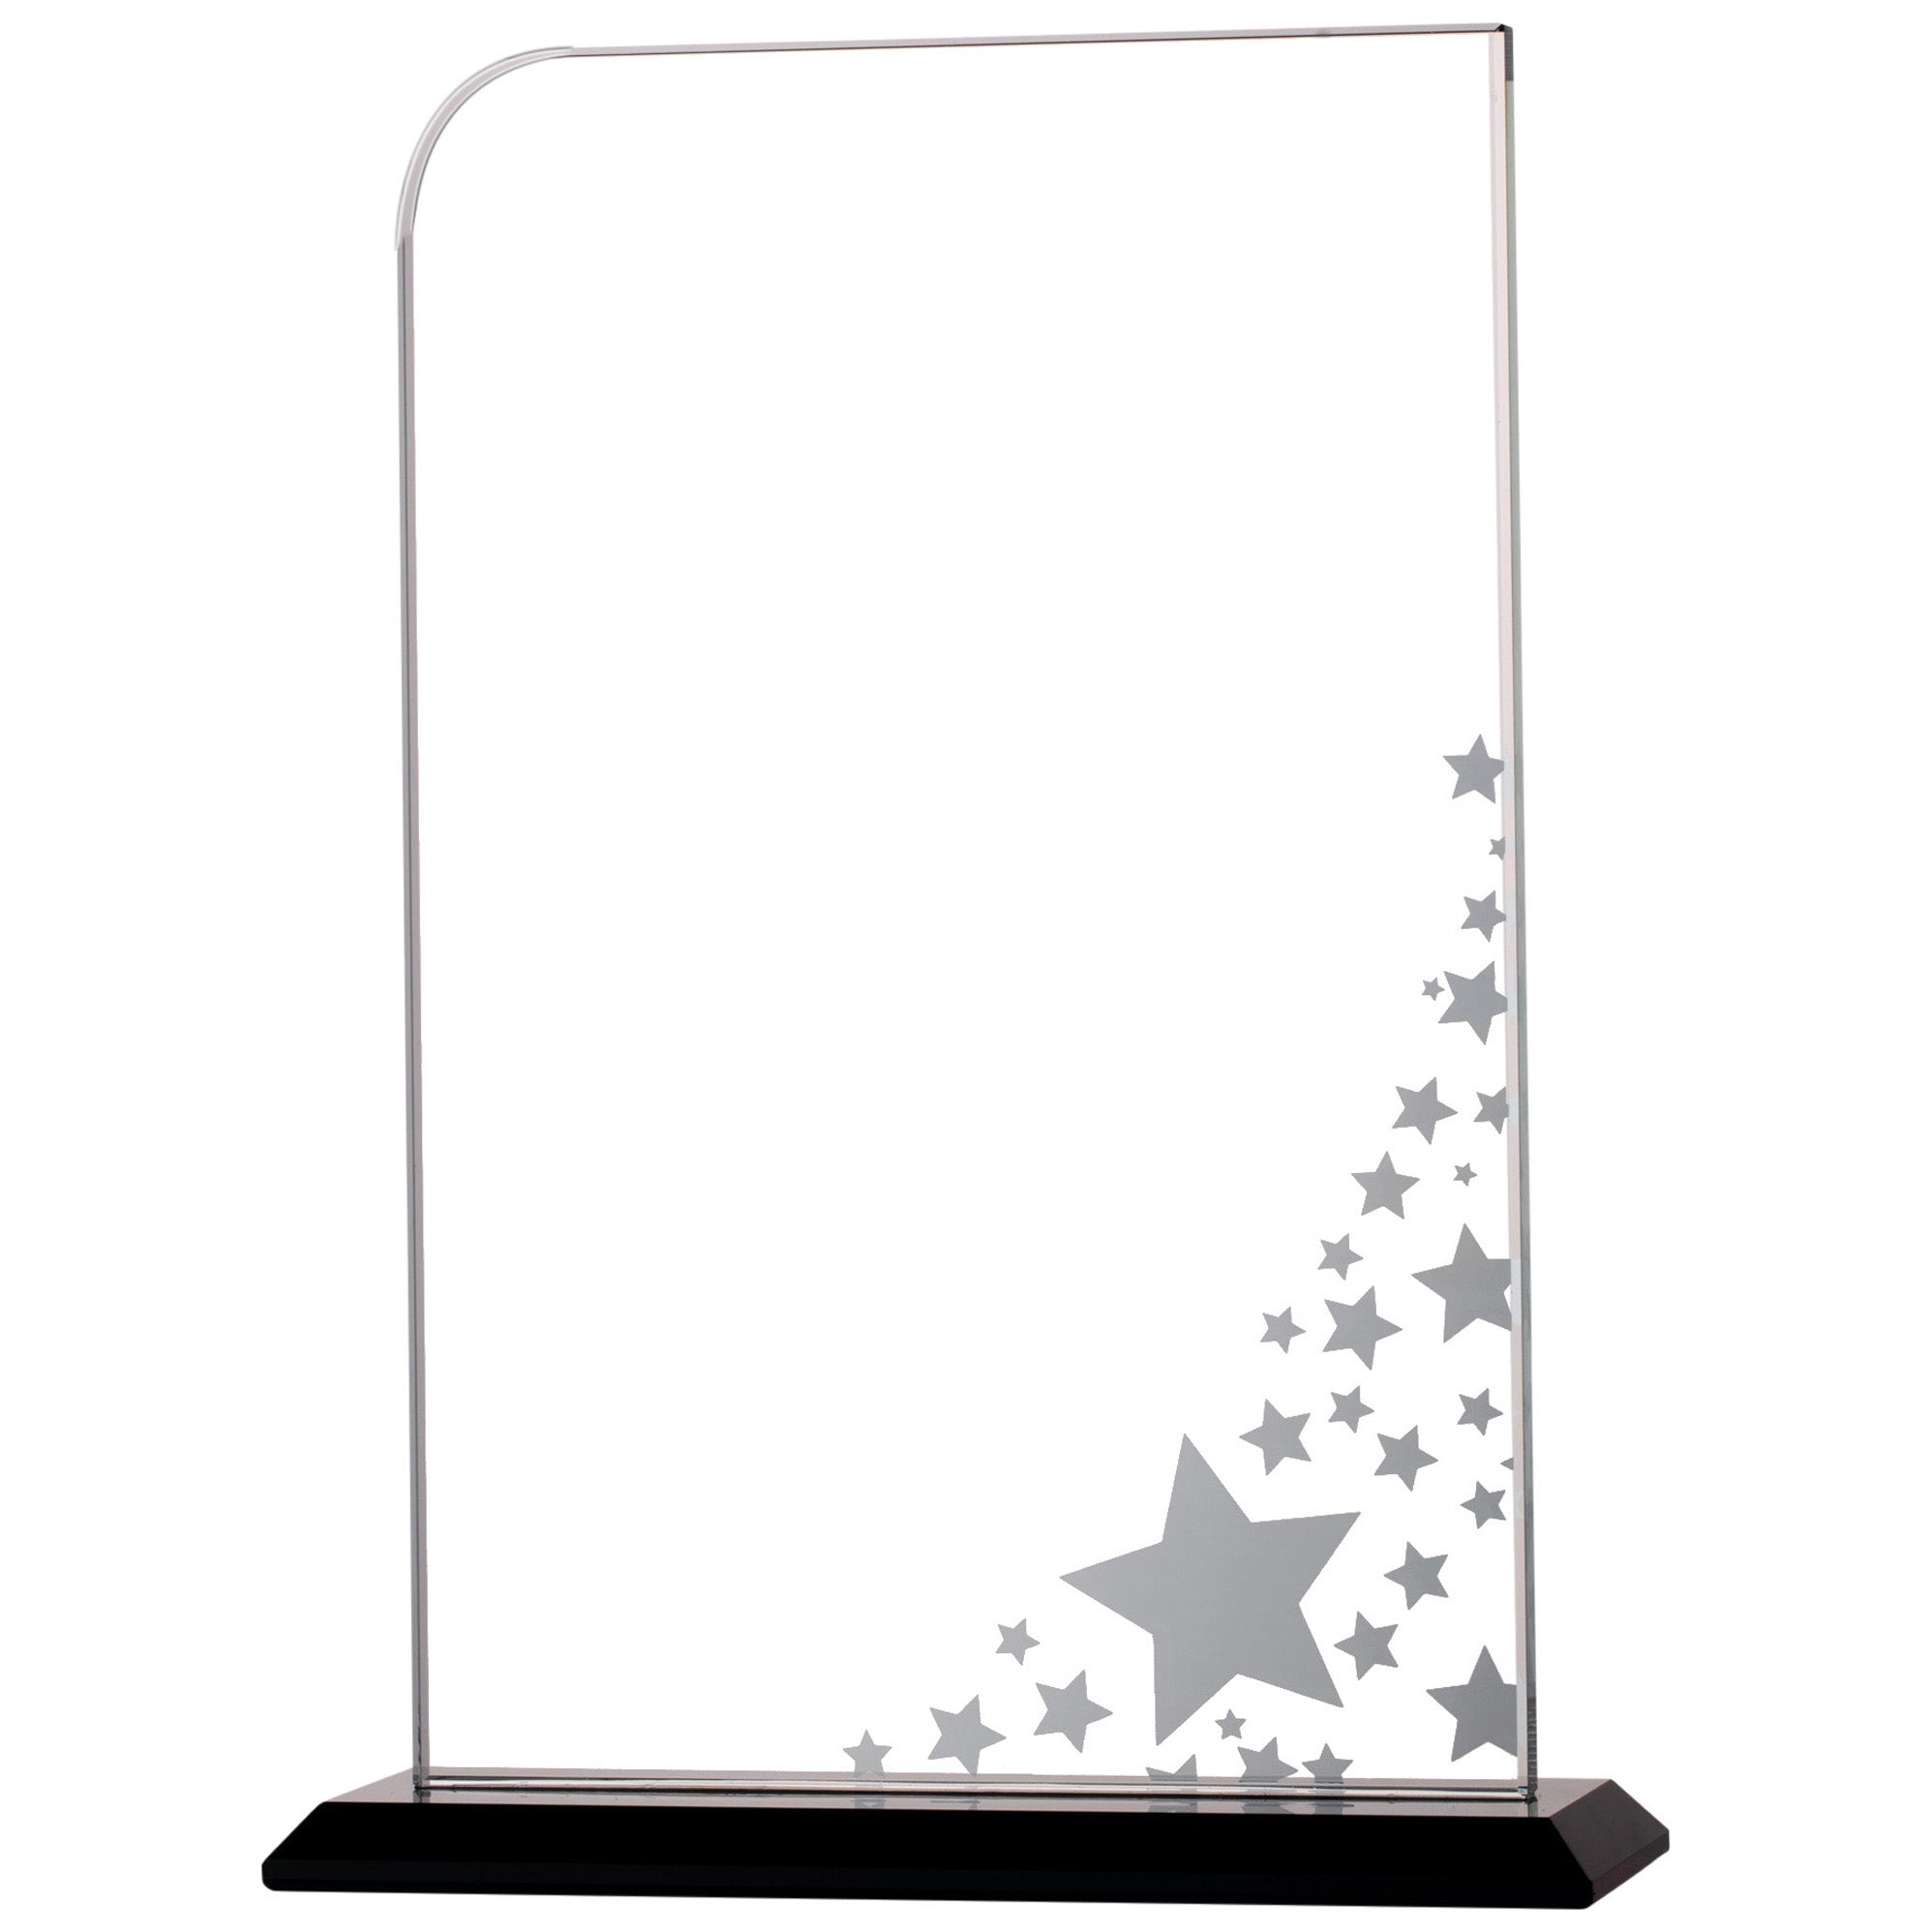 Portrait Glass Award with Stars Detailing on Black Base